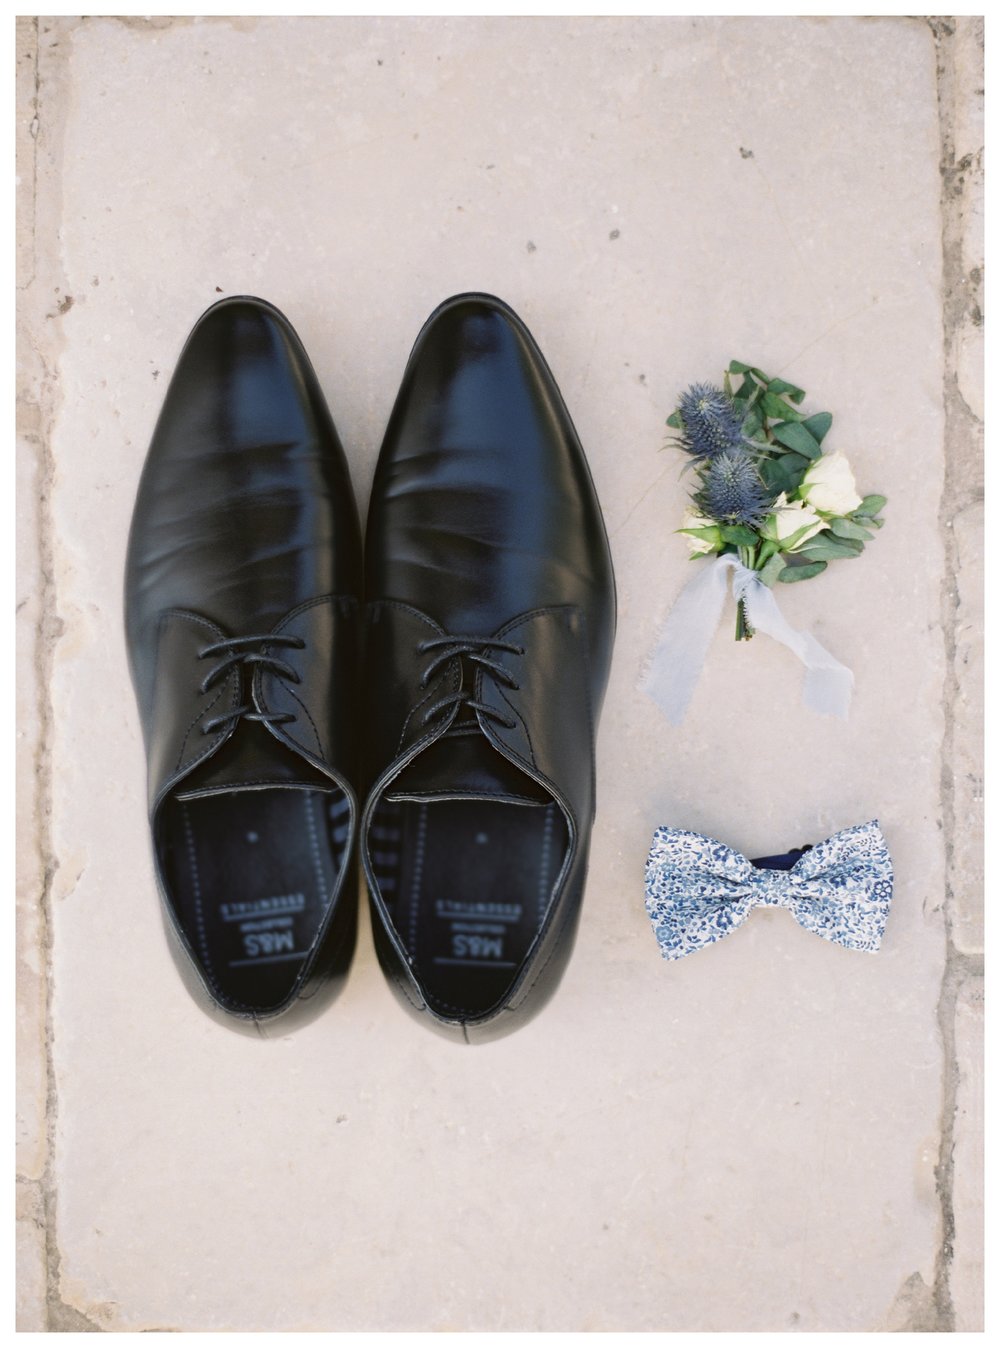 groom shoes, bowtie, boutonniere